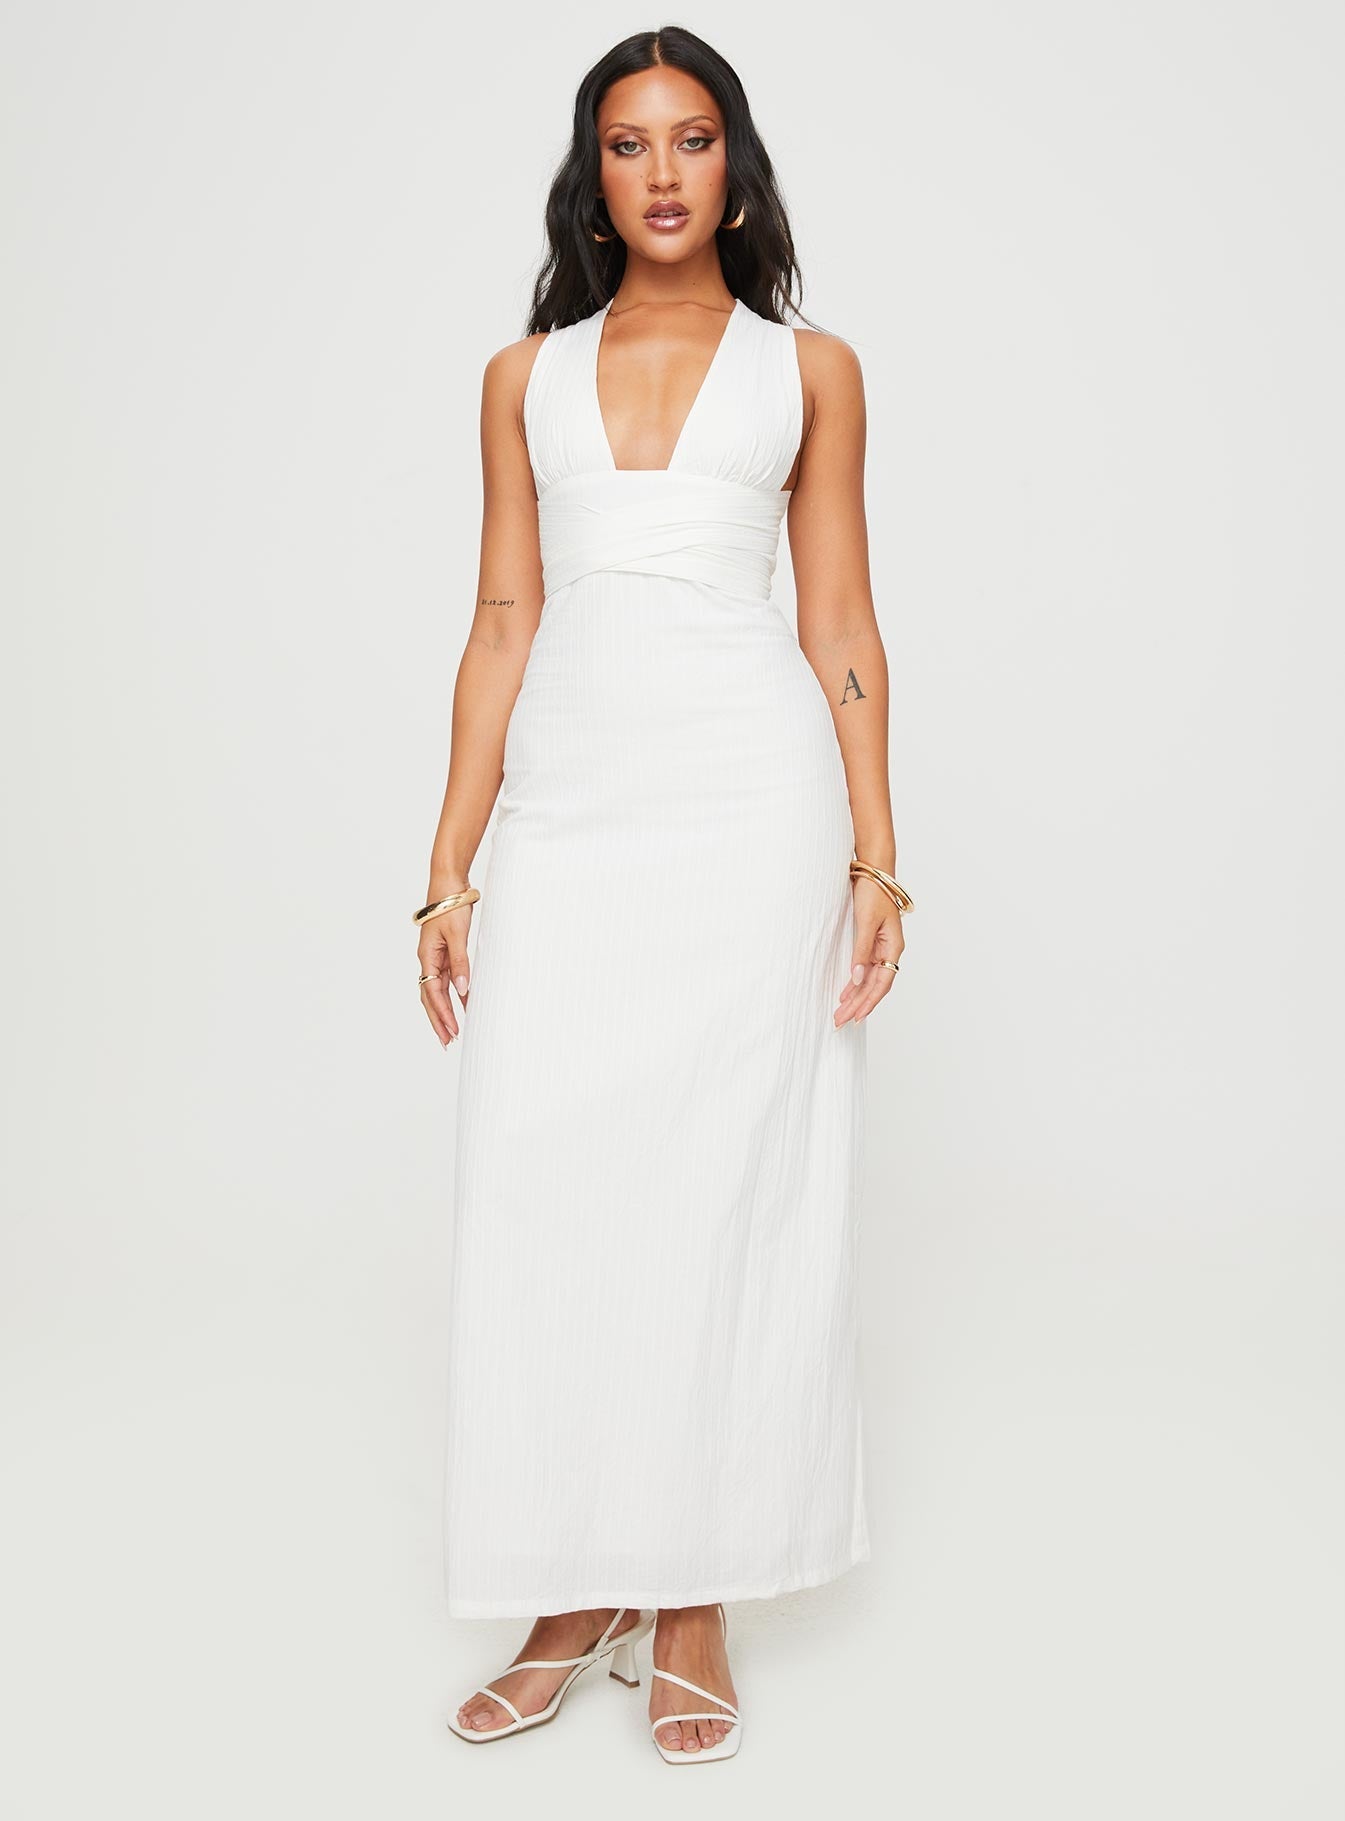 Shop Formal Dress - Alsace Maxi Dress White fifth image